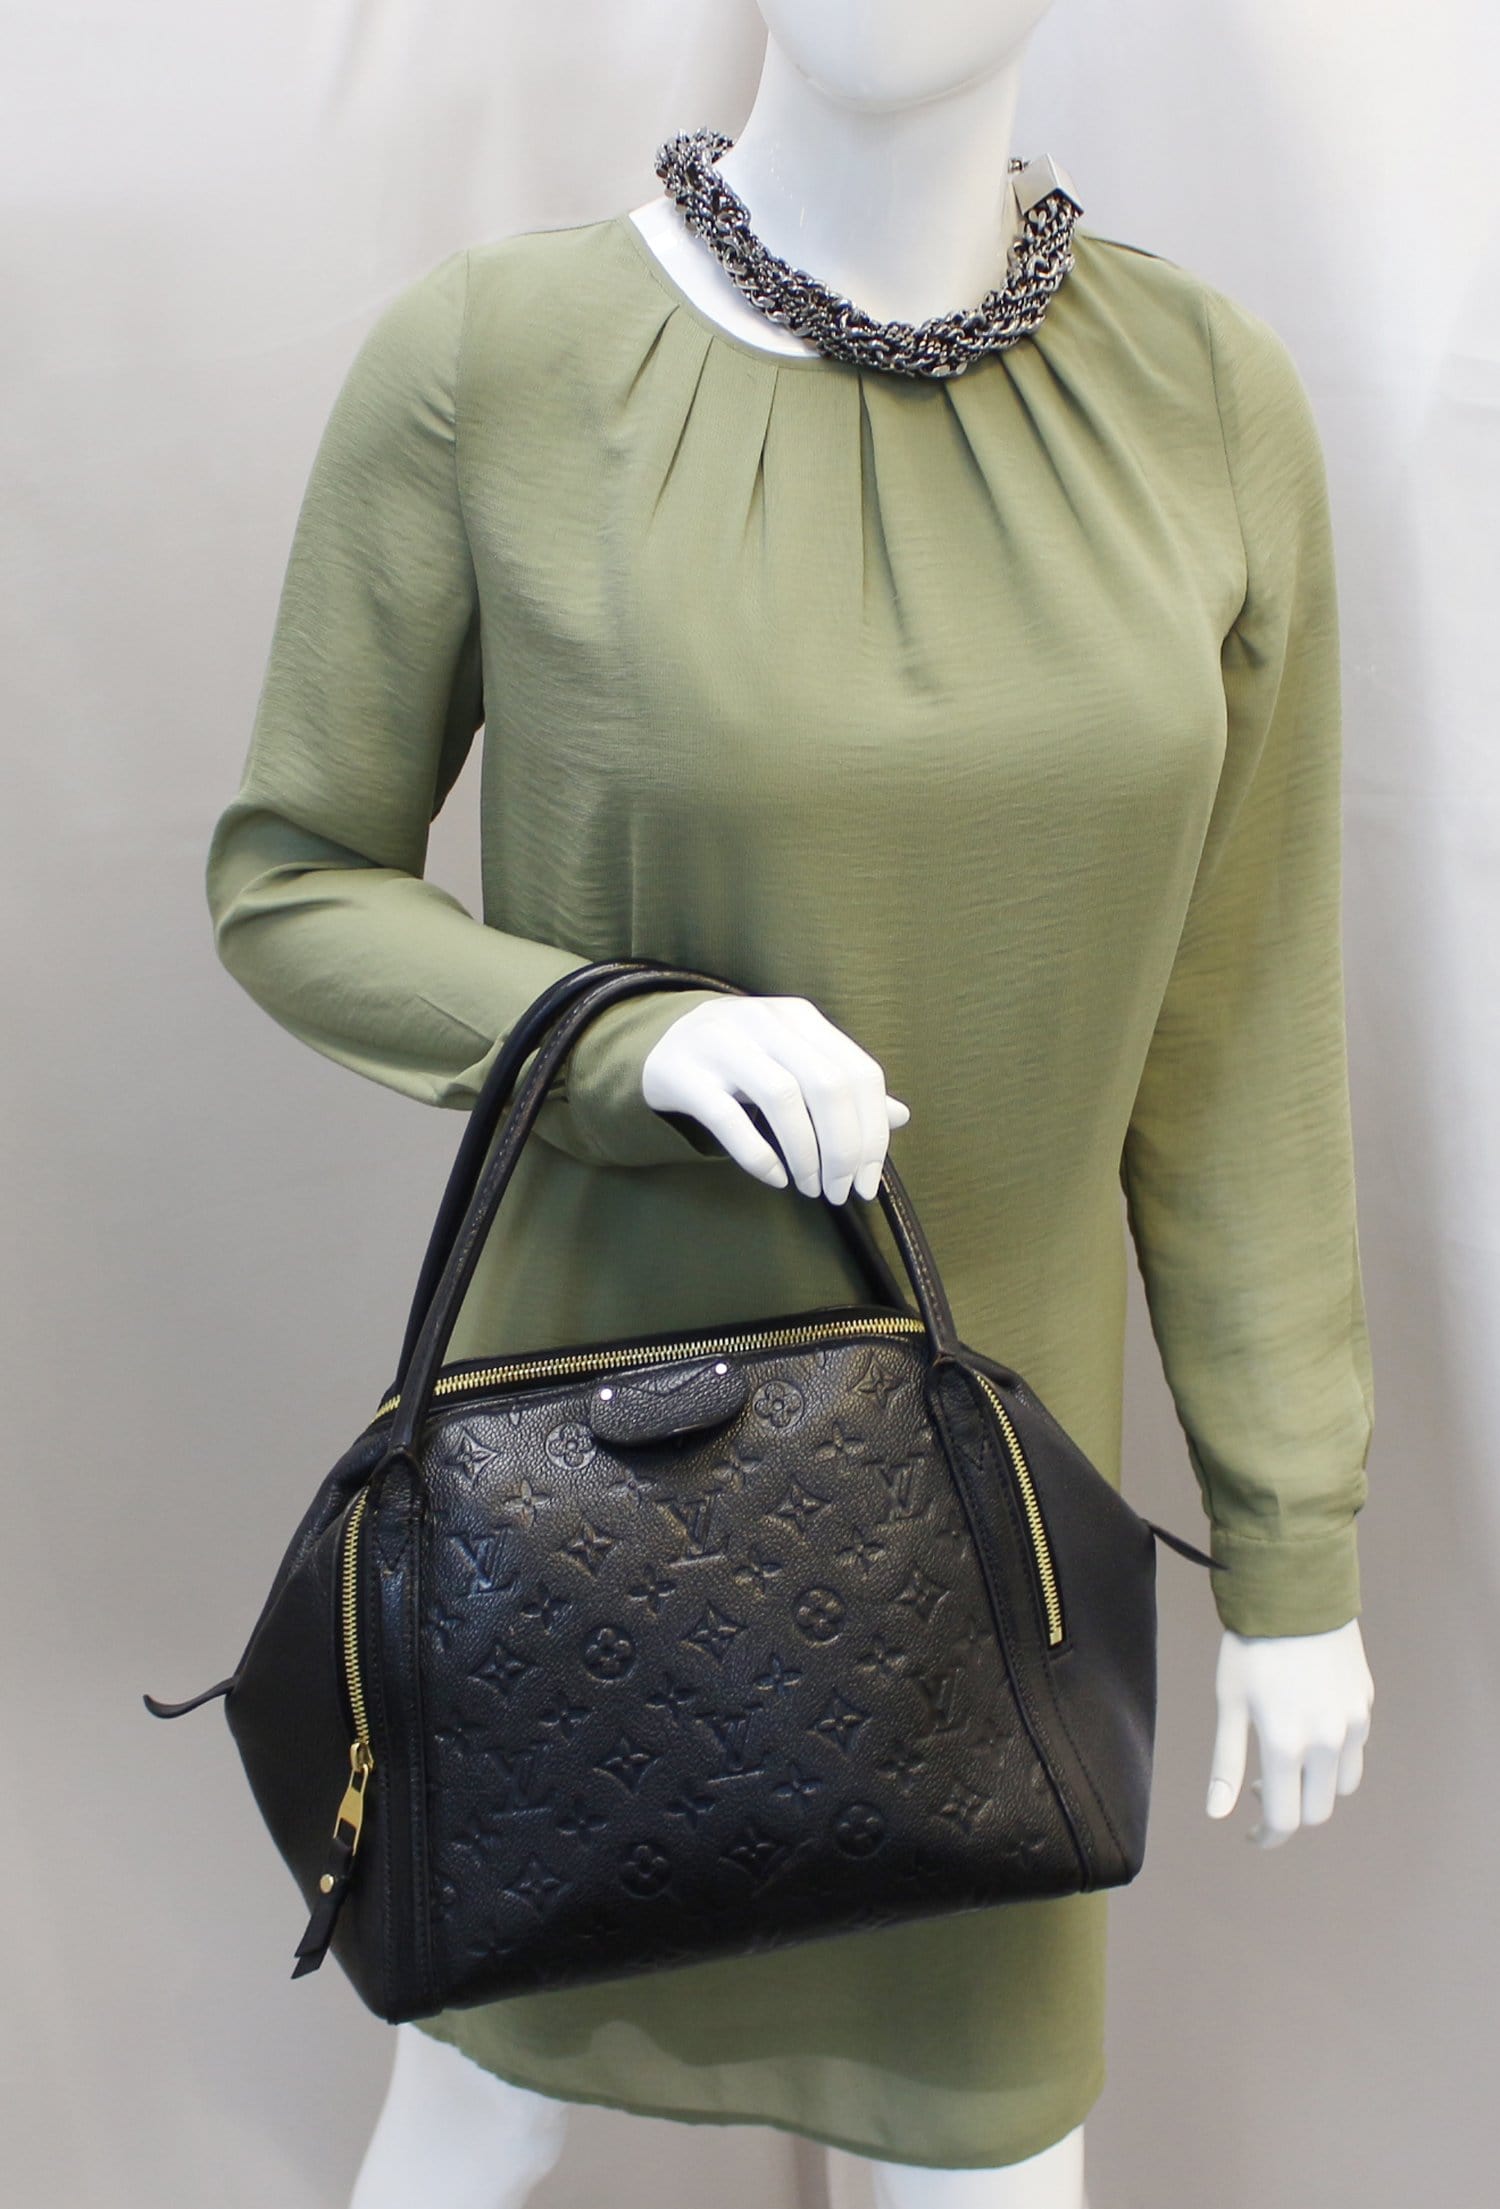 Authentic Louis Vuitton Marais Handbag Monogram Empreinte Leather